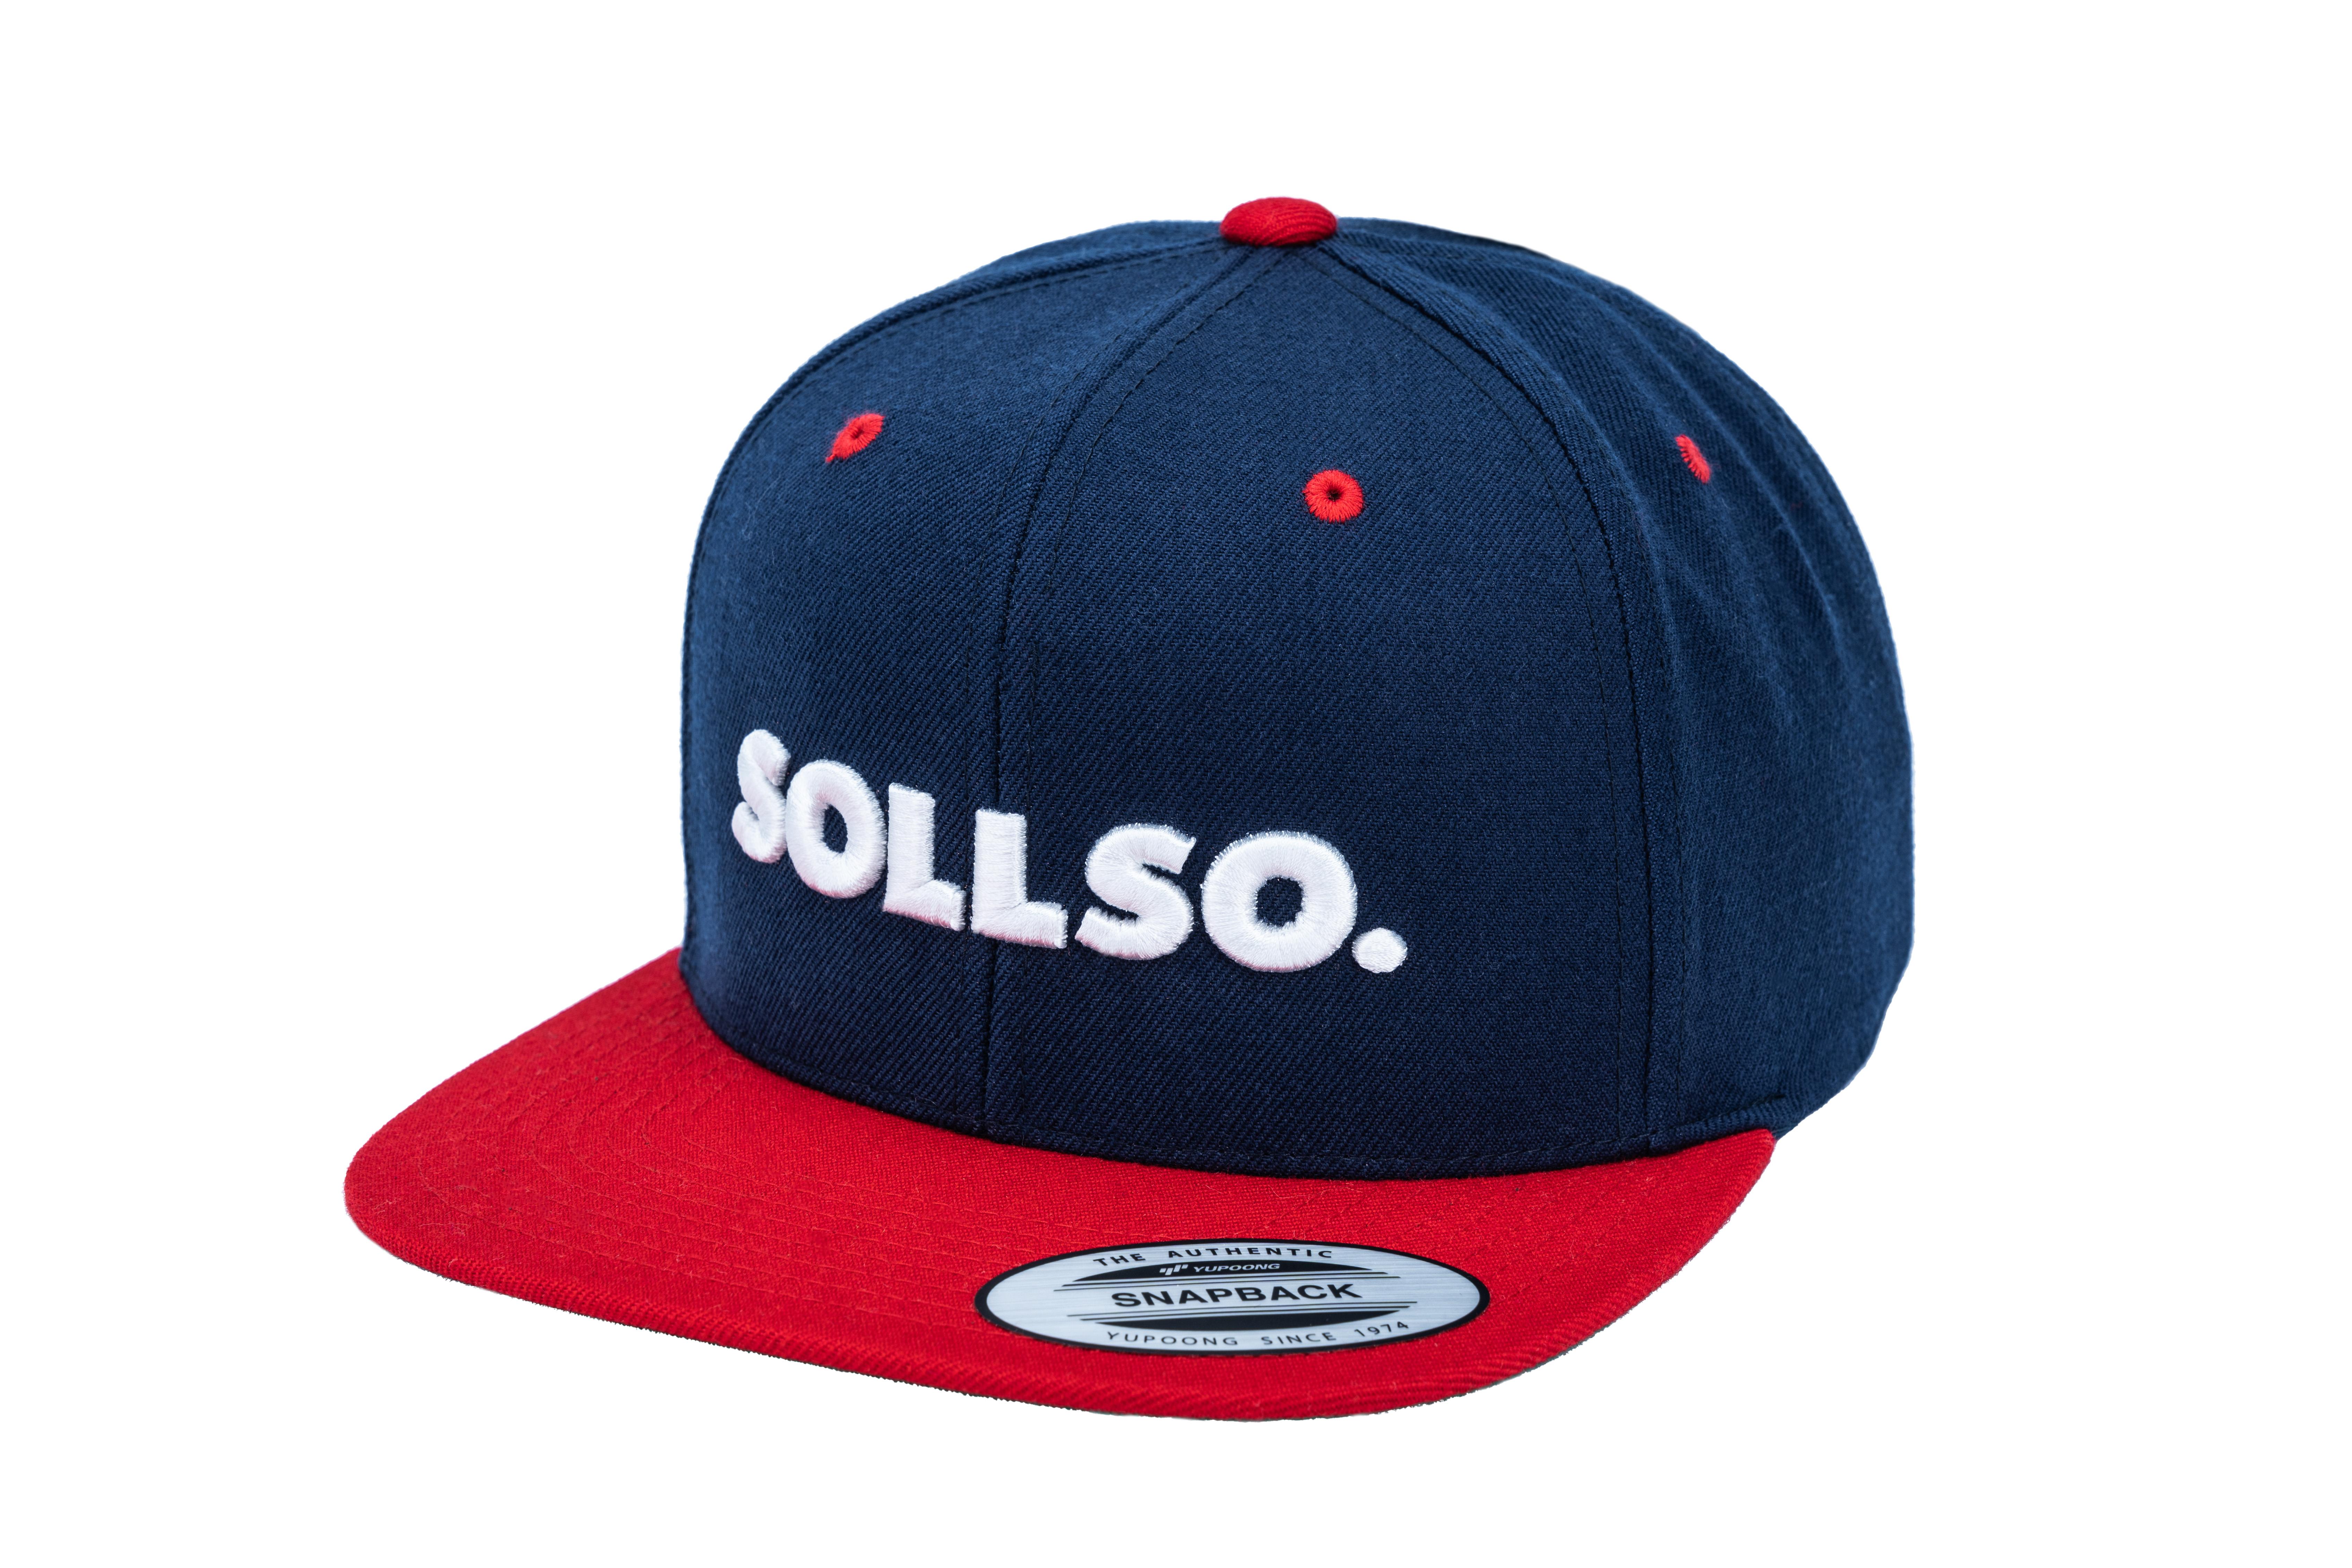 SOLLSO. Classic Snapback 2-Tone Cap, Navy-Red